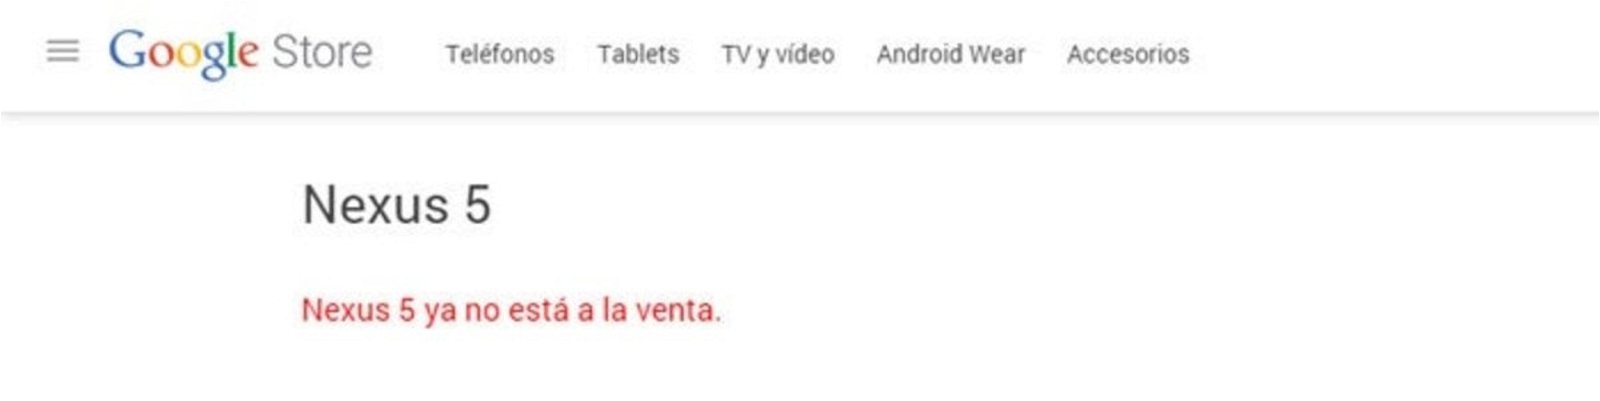 Google Shop Nexus 5